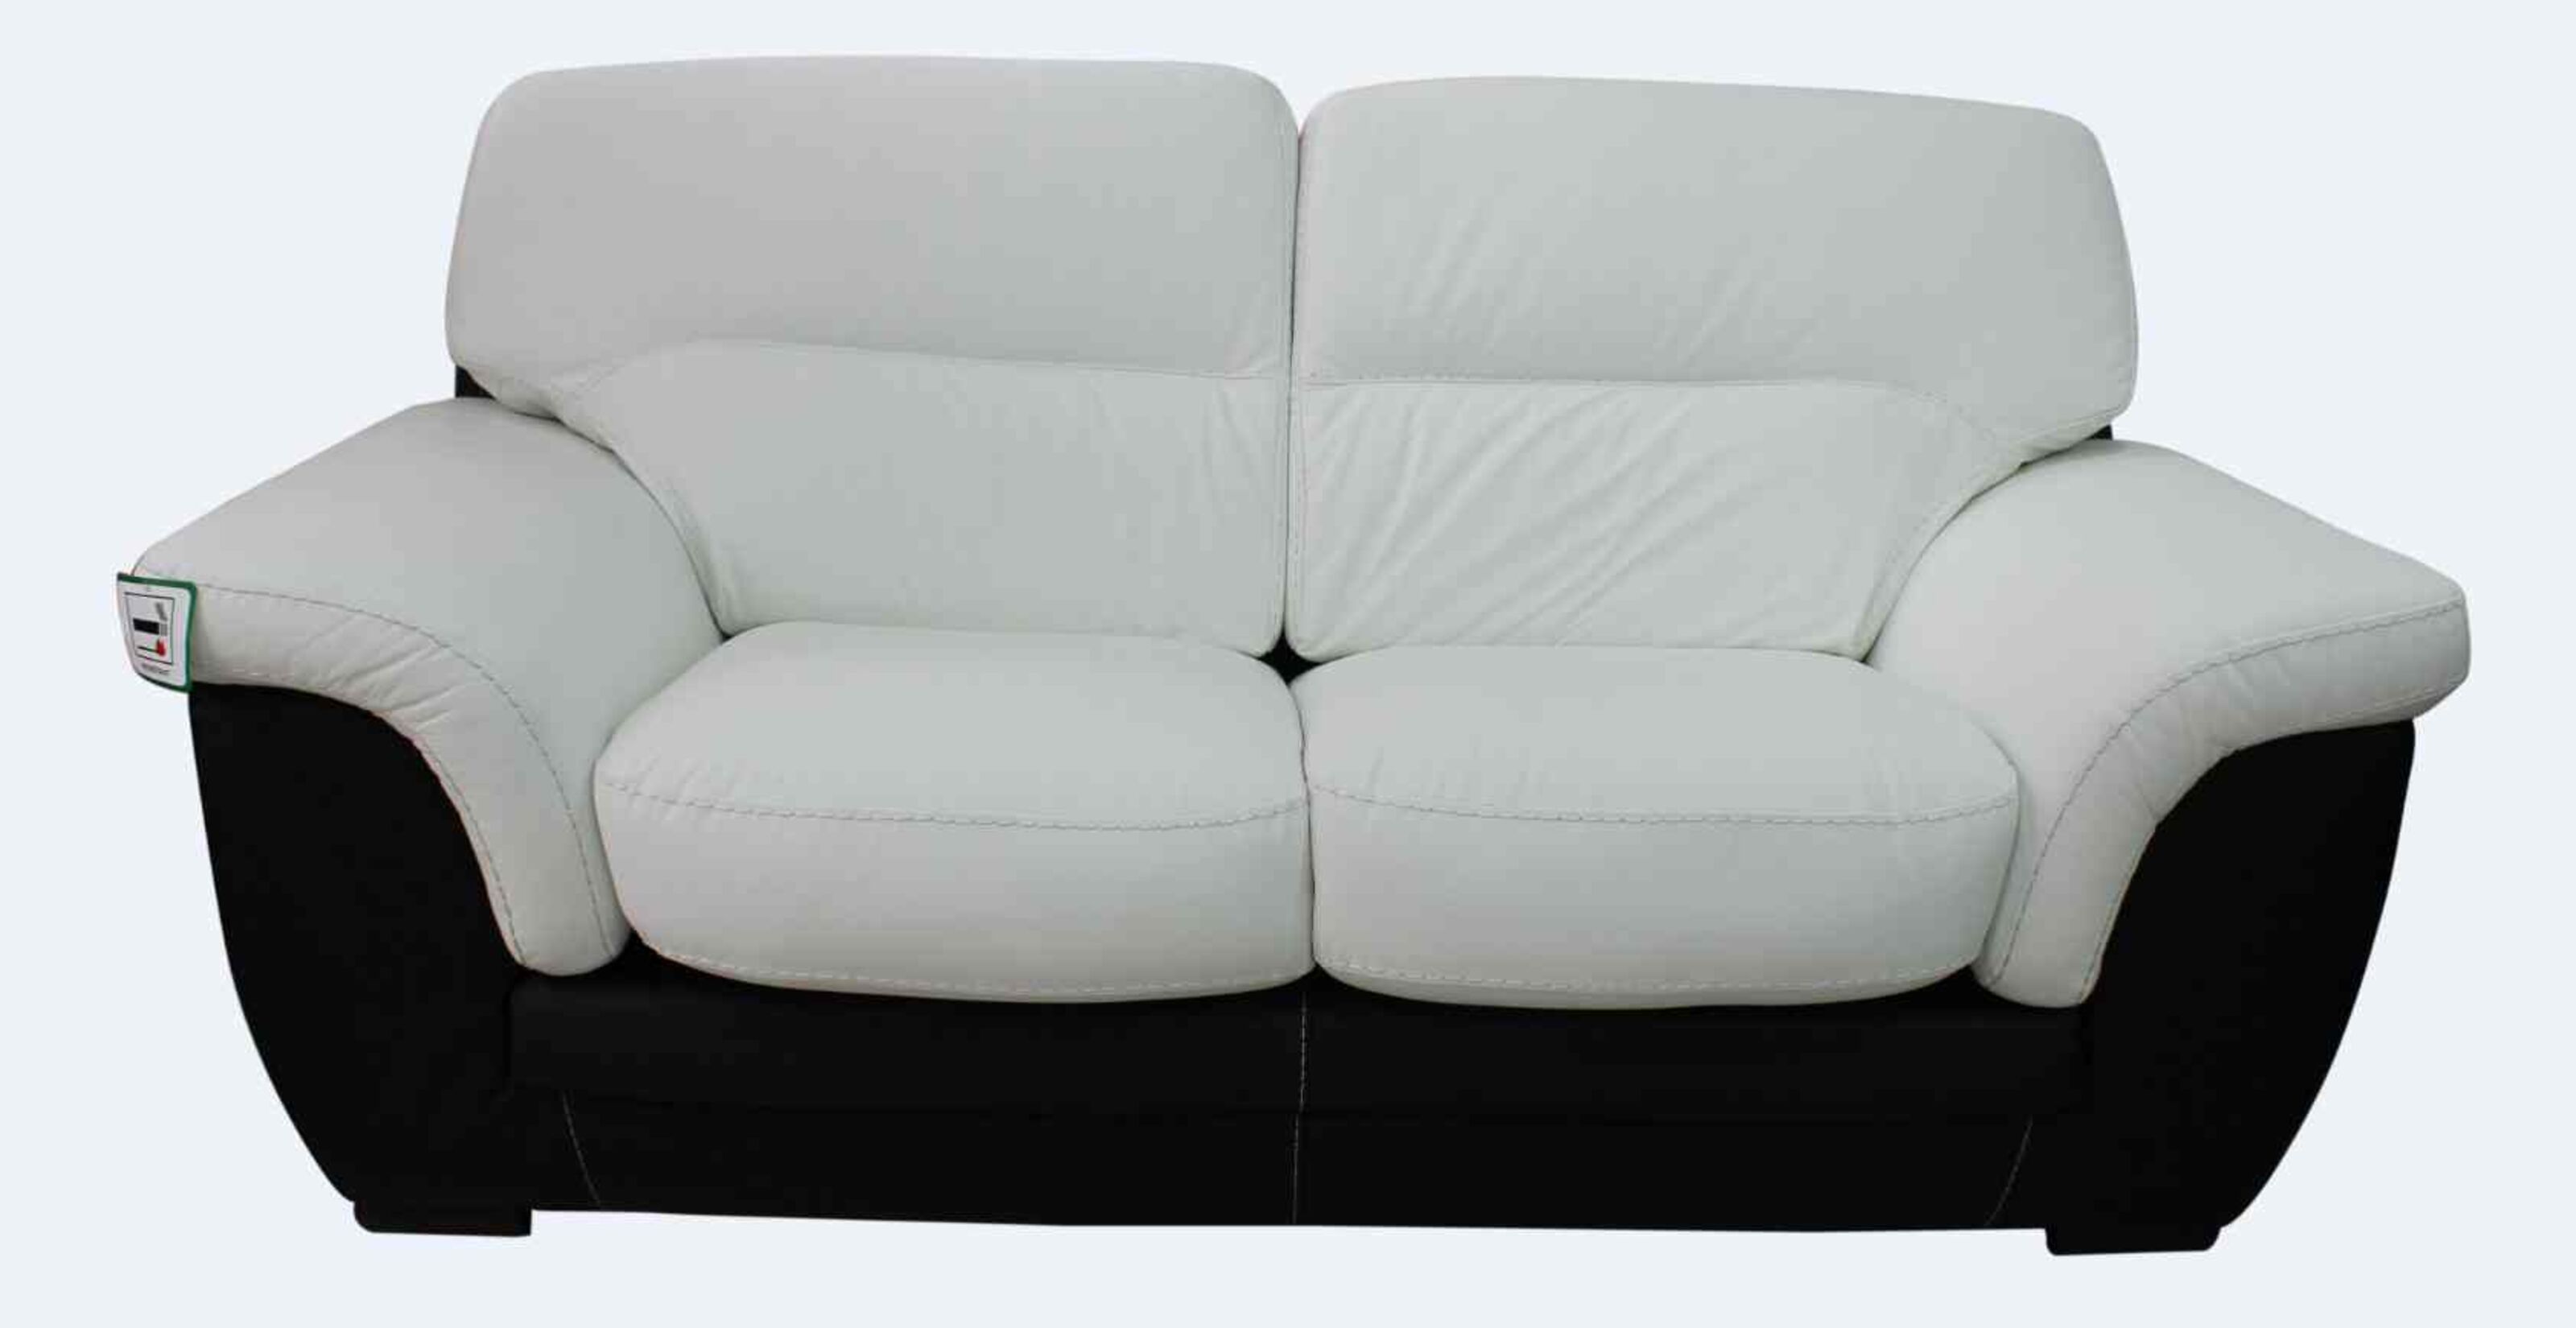 Italian Daniel Leather 2 Seater, Black And White Leather Furniture